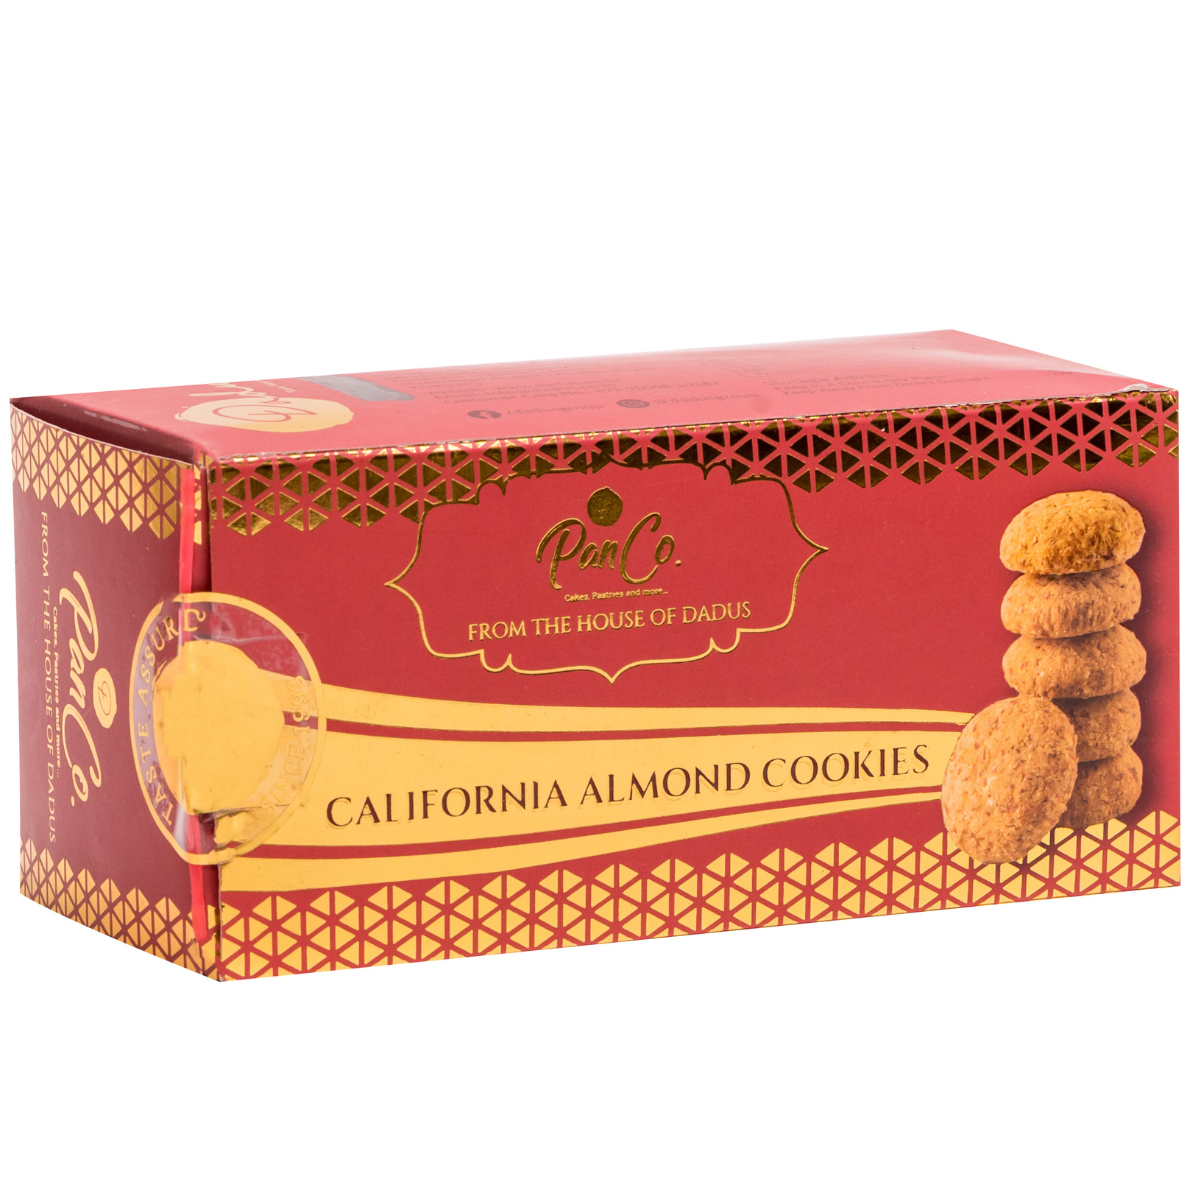 California Almond Cookies